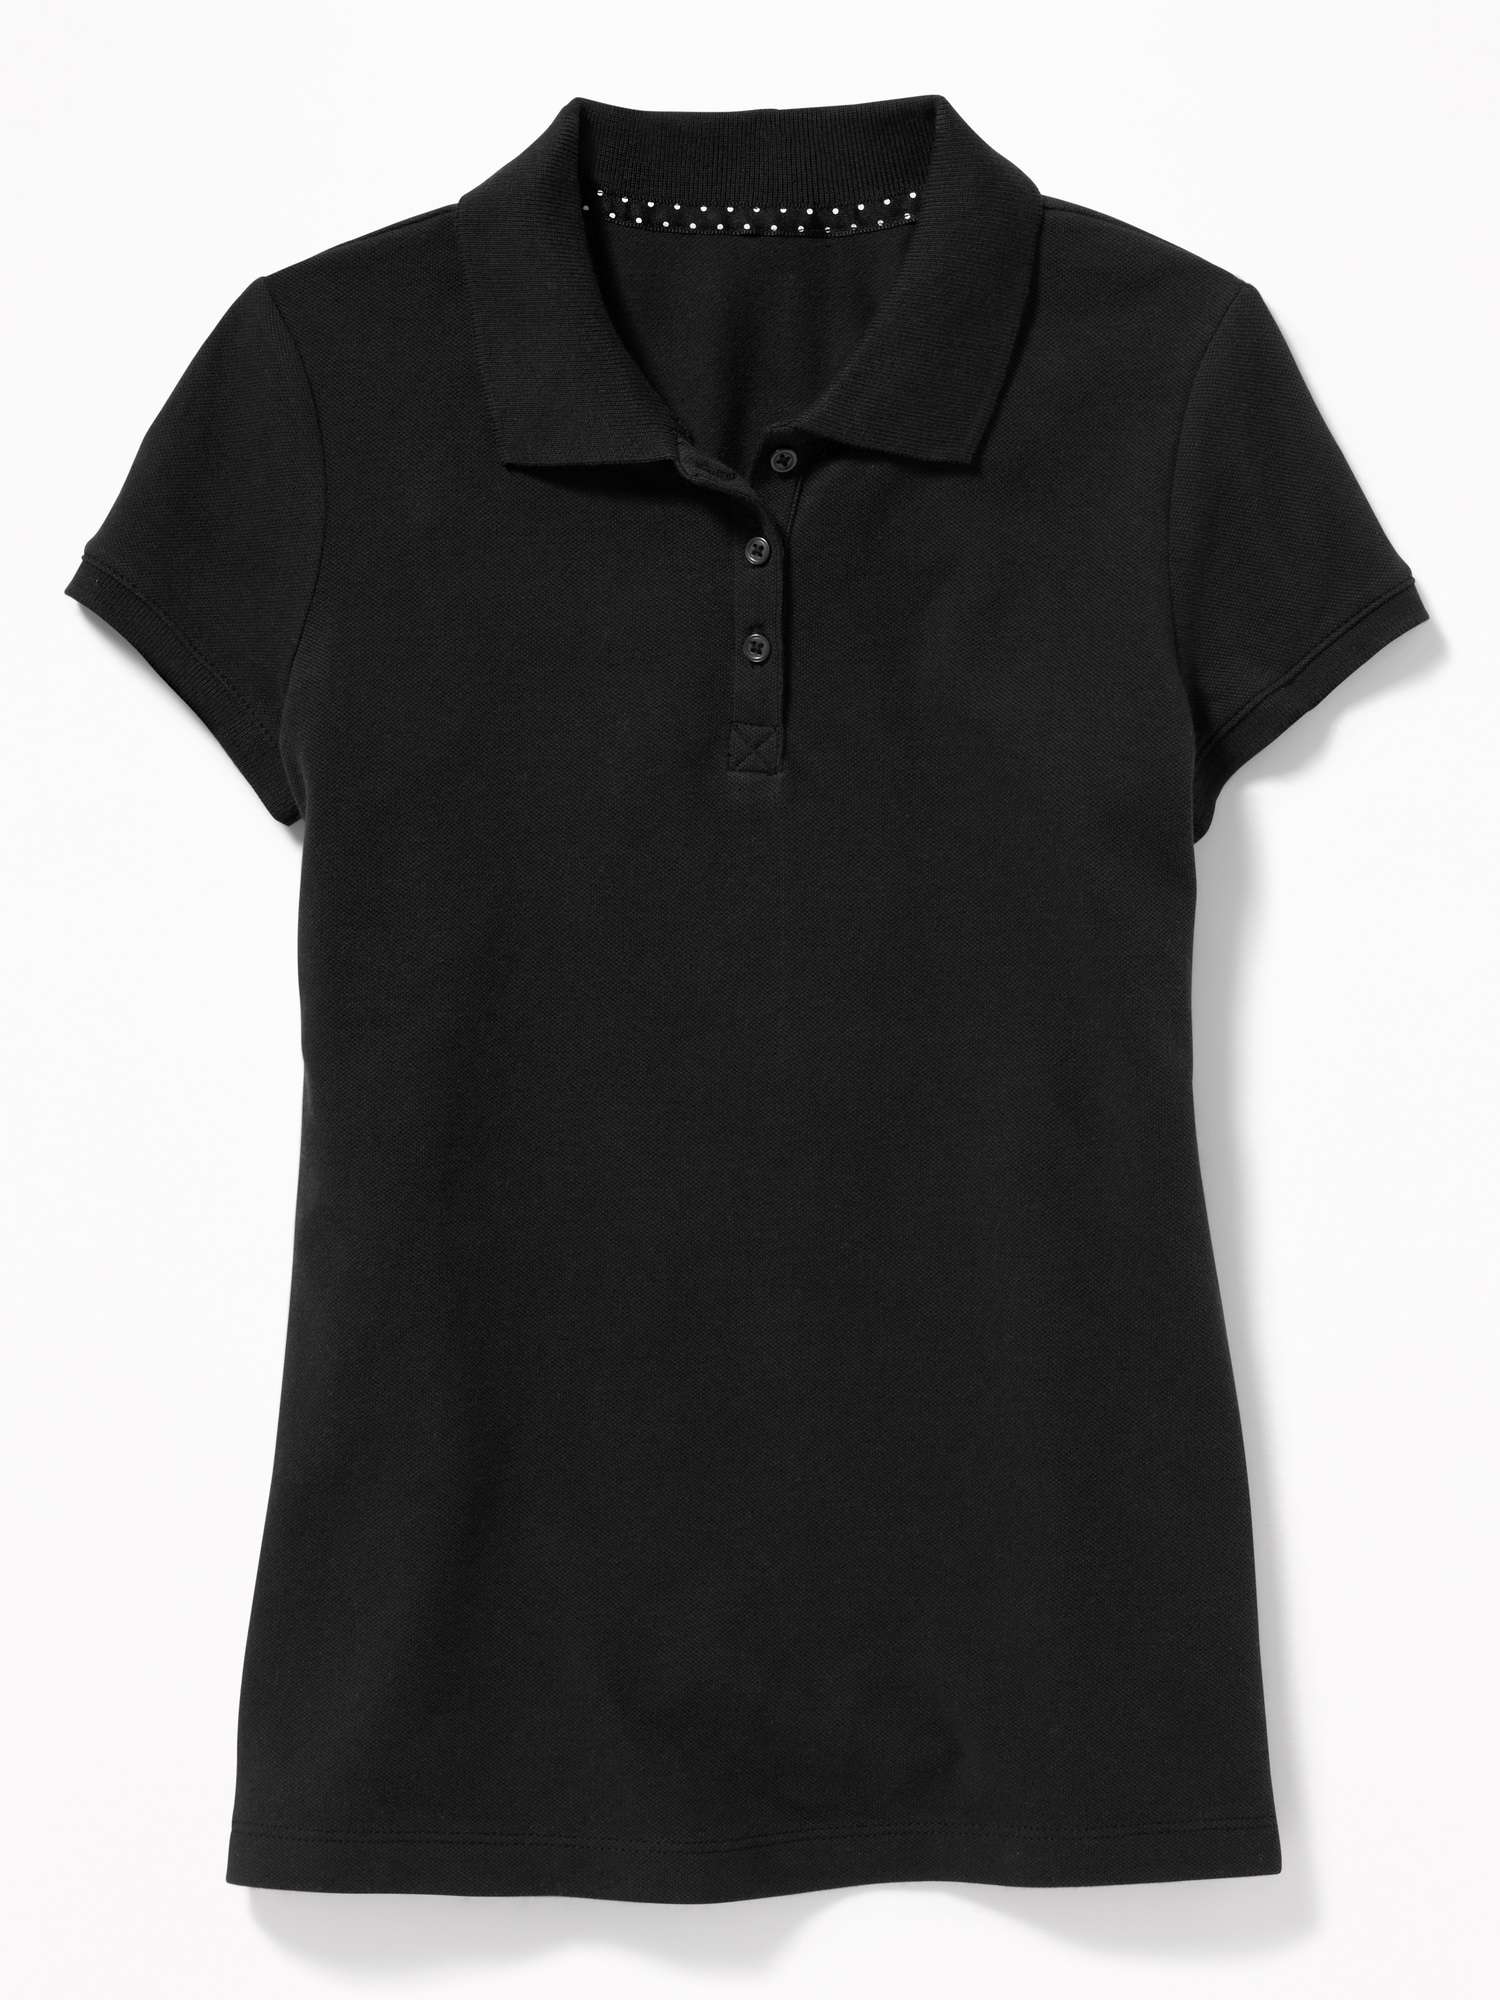 Old Navy Uniform Pique Polo Shirt for Girls black. 1